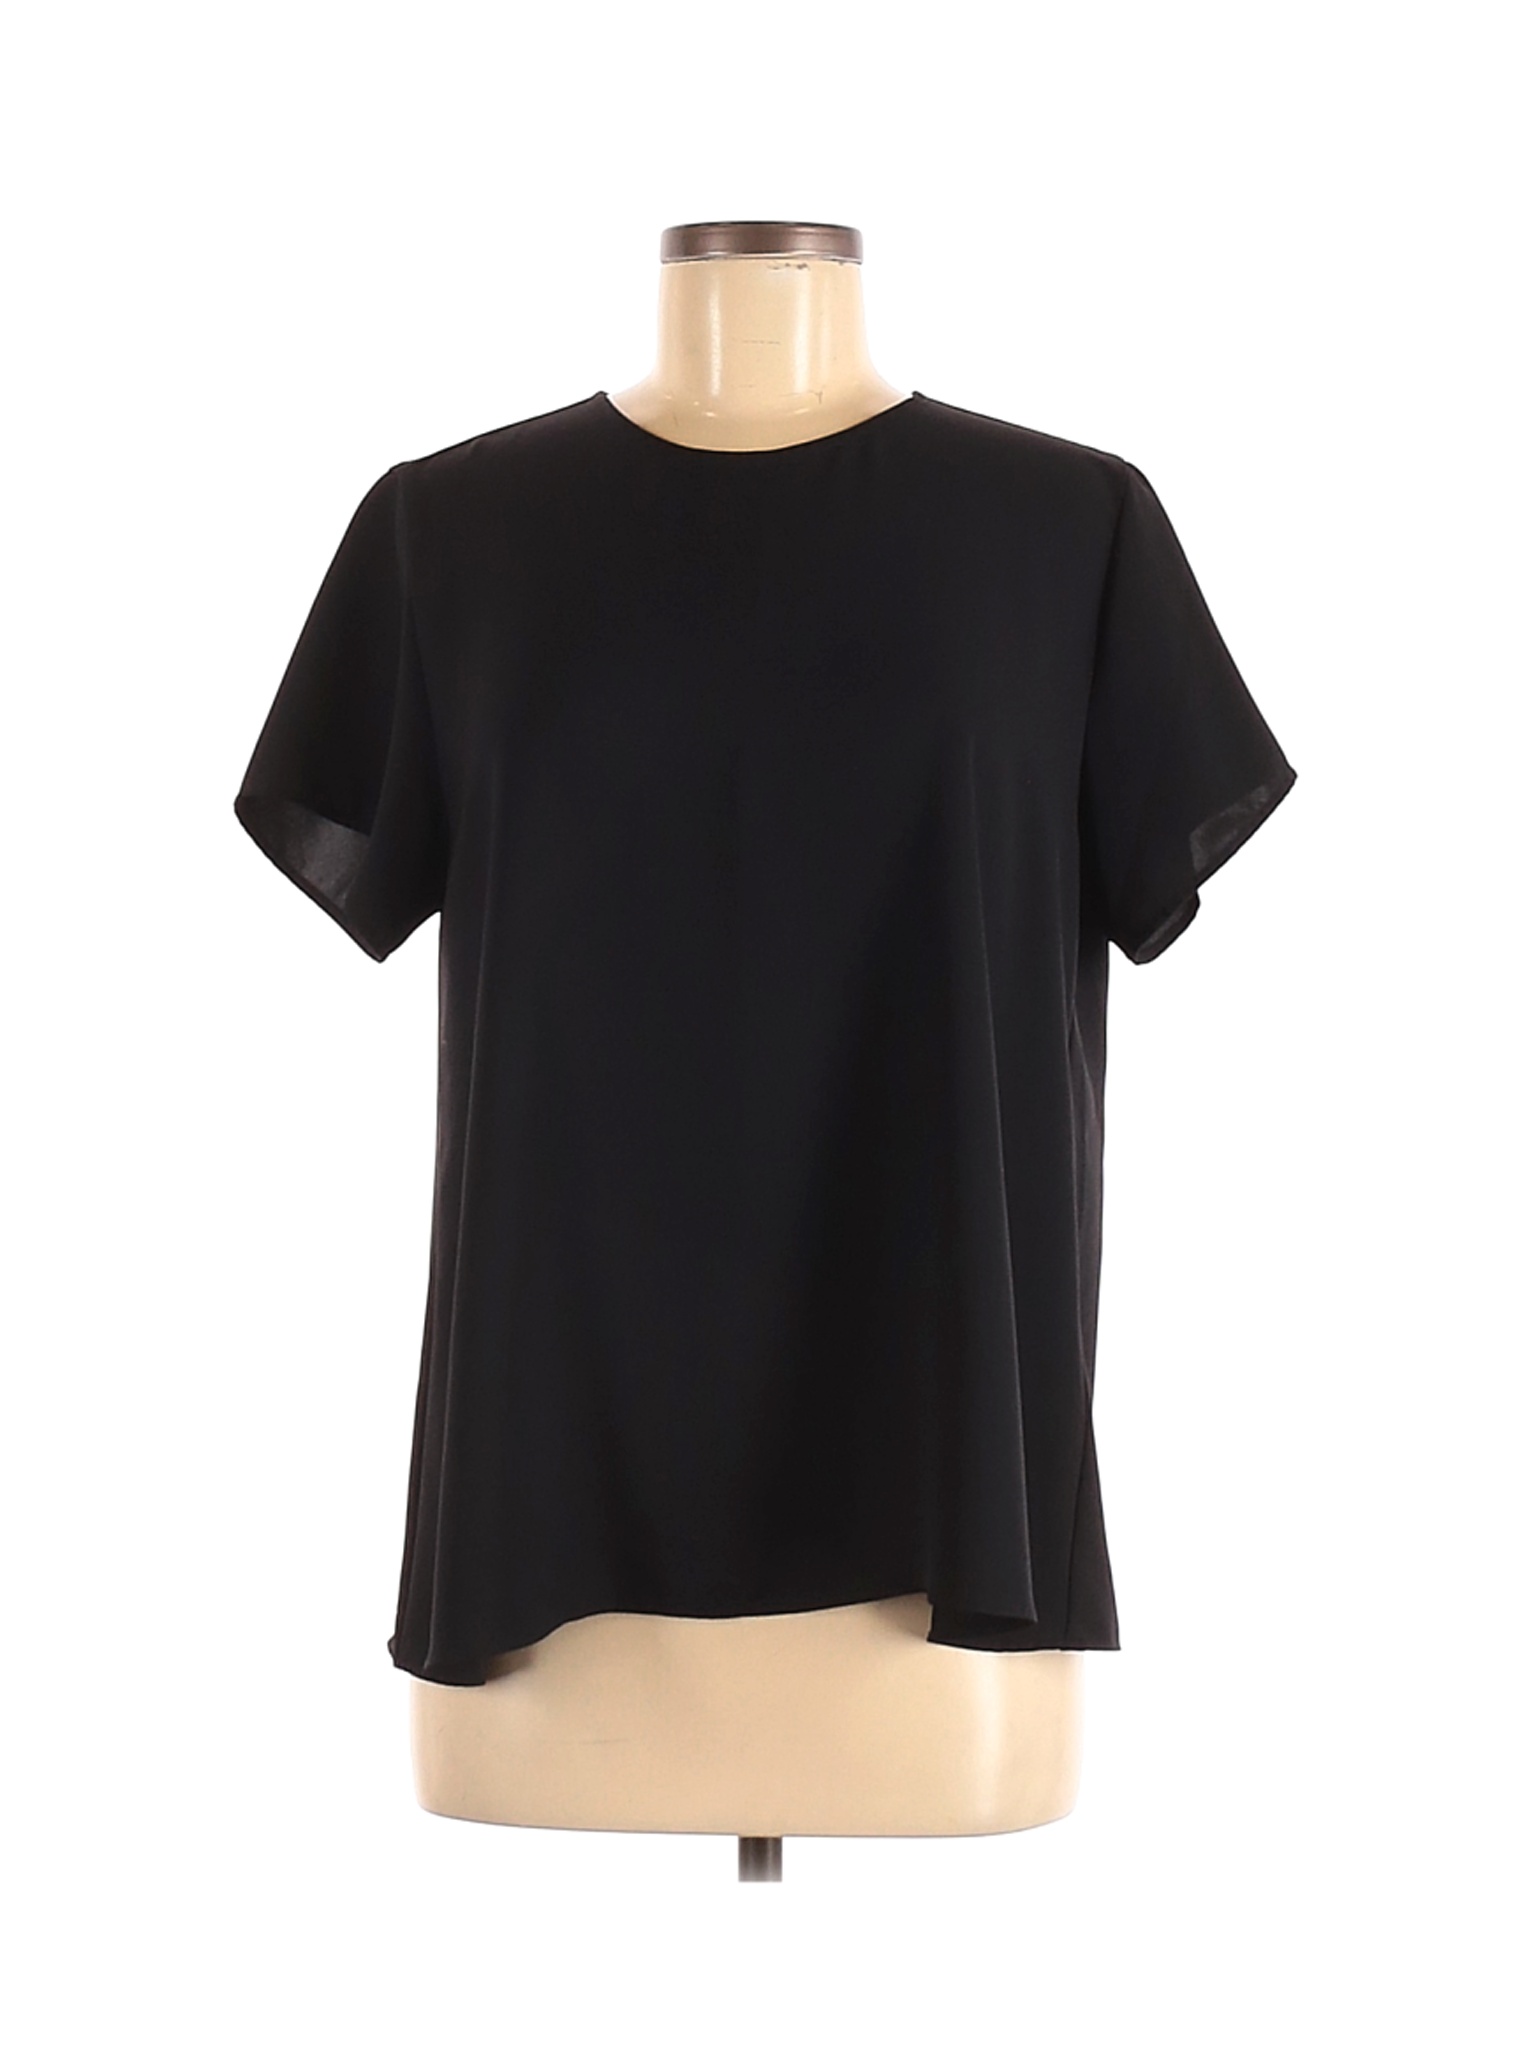 Uniqlo Women Black Short Sleeve Blouse M | eBay